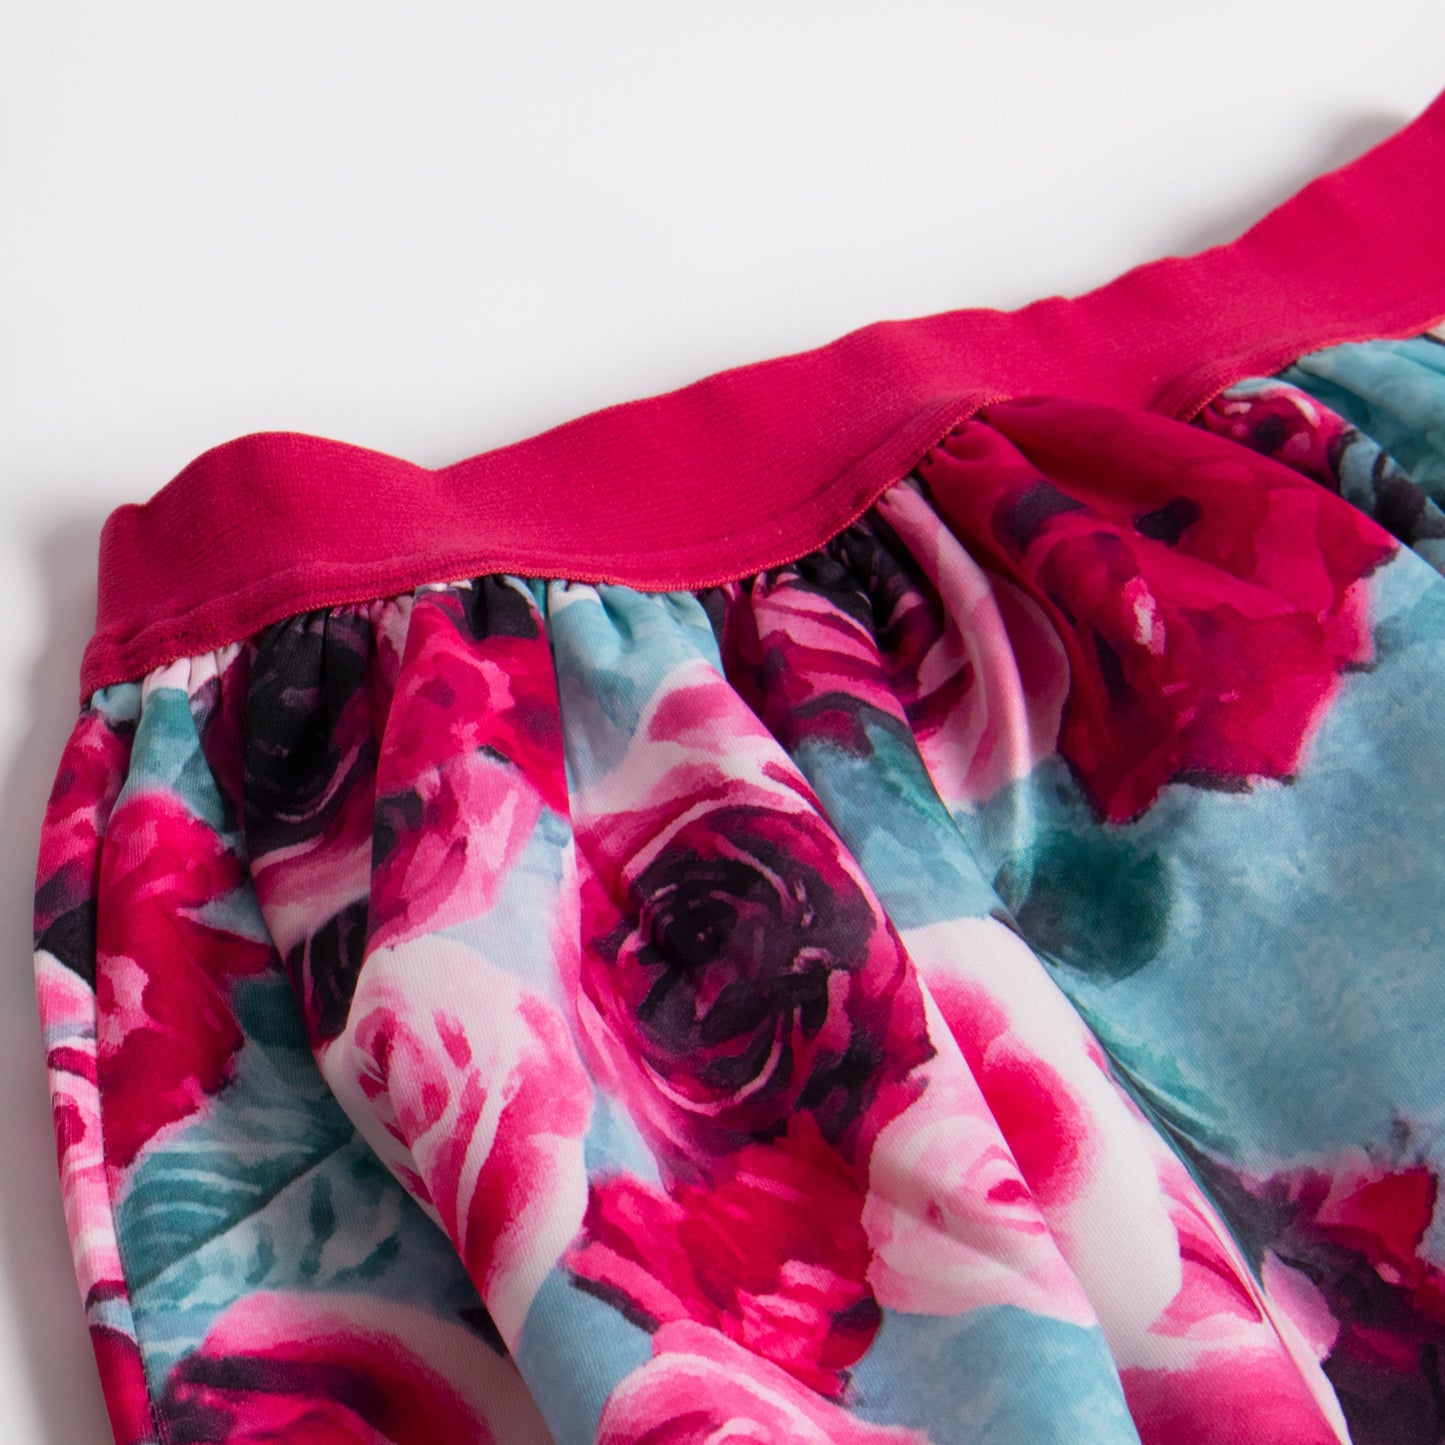 Pink Rose Knit Skirt